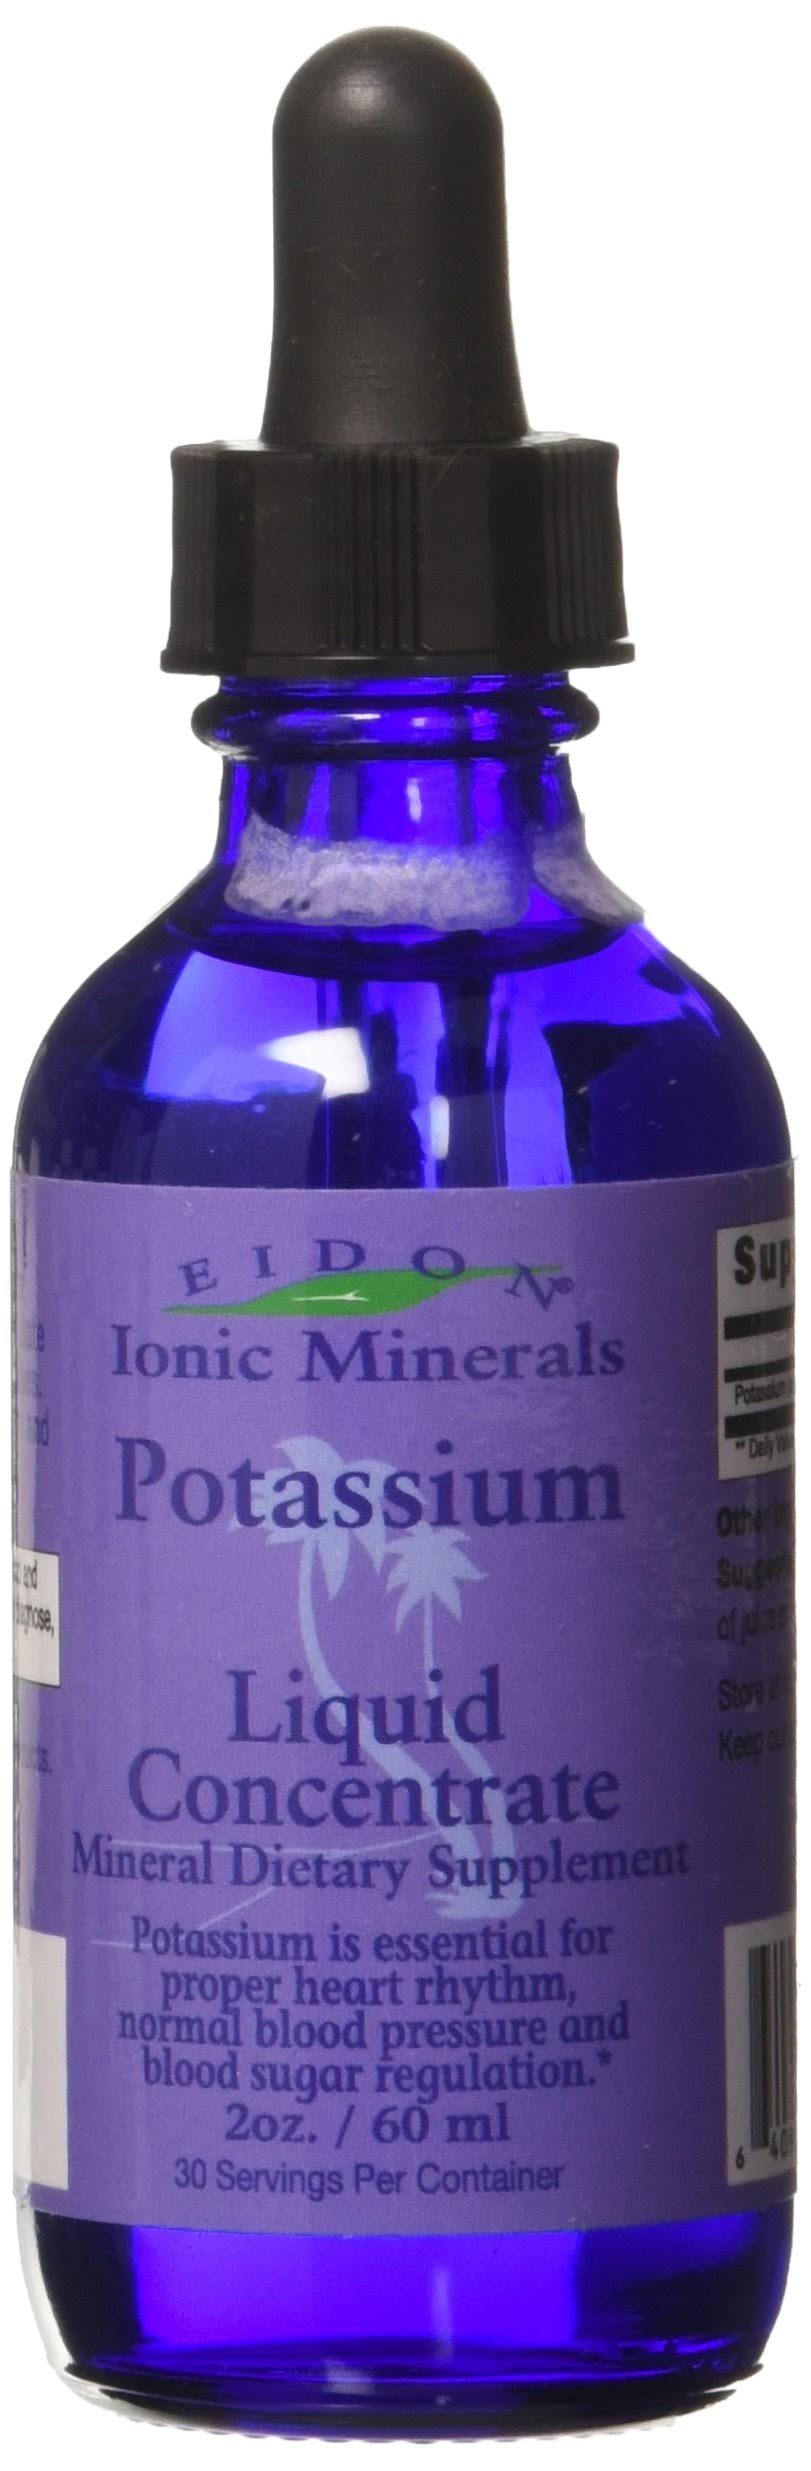 Eidon Potassium Mineral Liquid Concentrate Supplement - 2oz